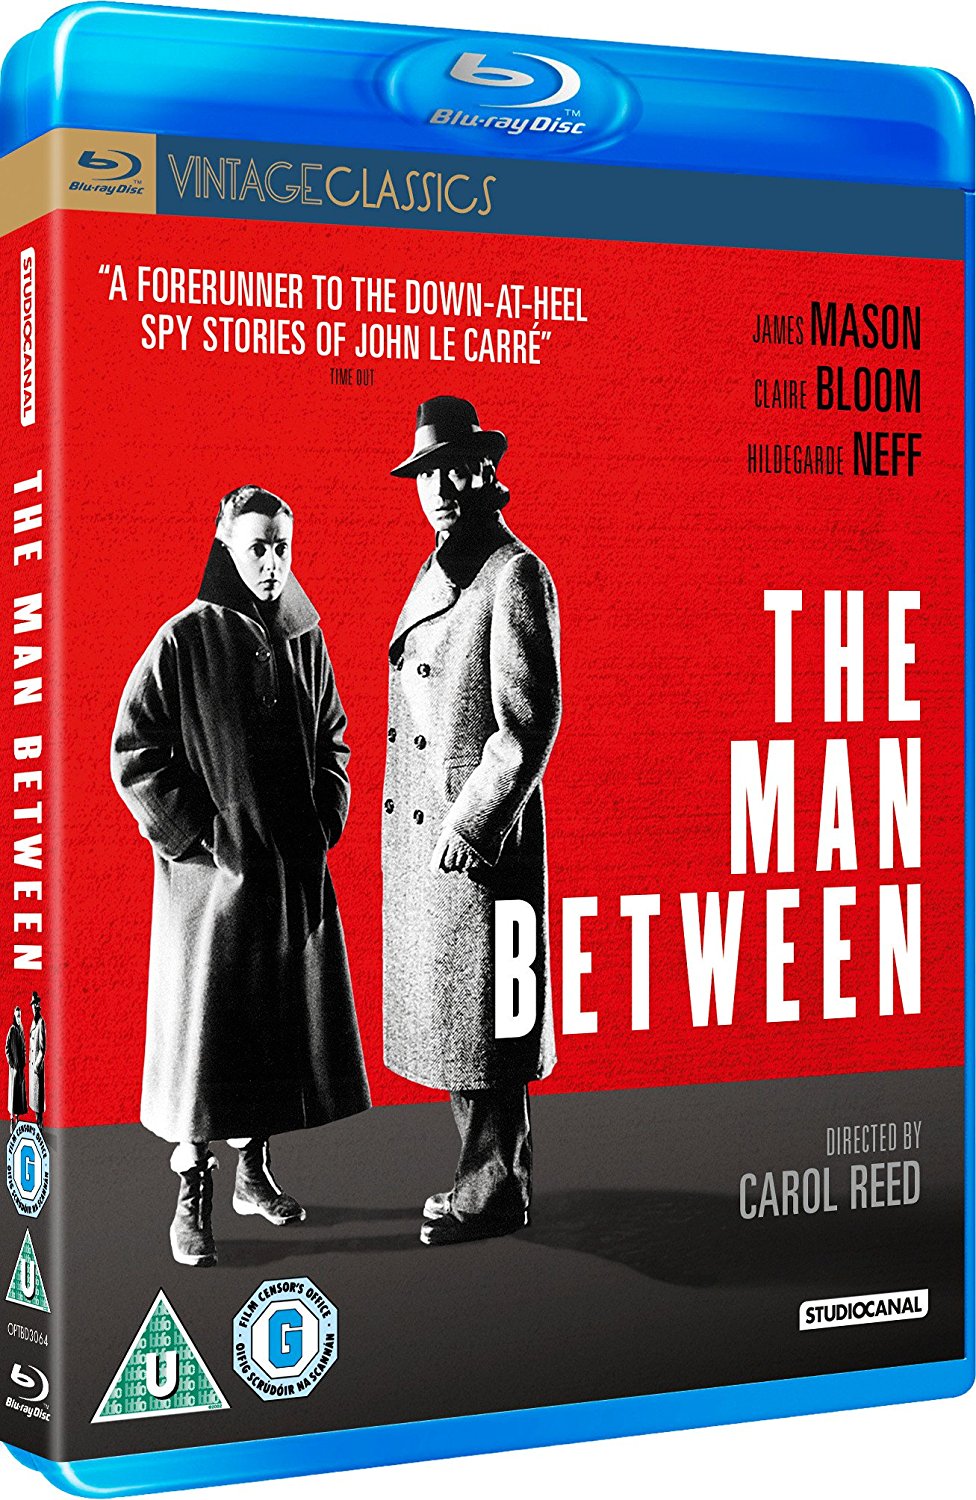 The Man Between (Digitally Restored) [Blu-ray] [2016] (Blu-ray)